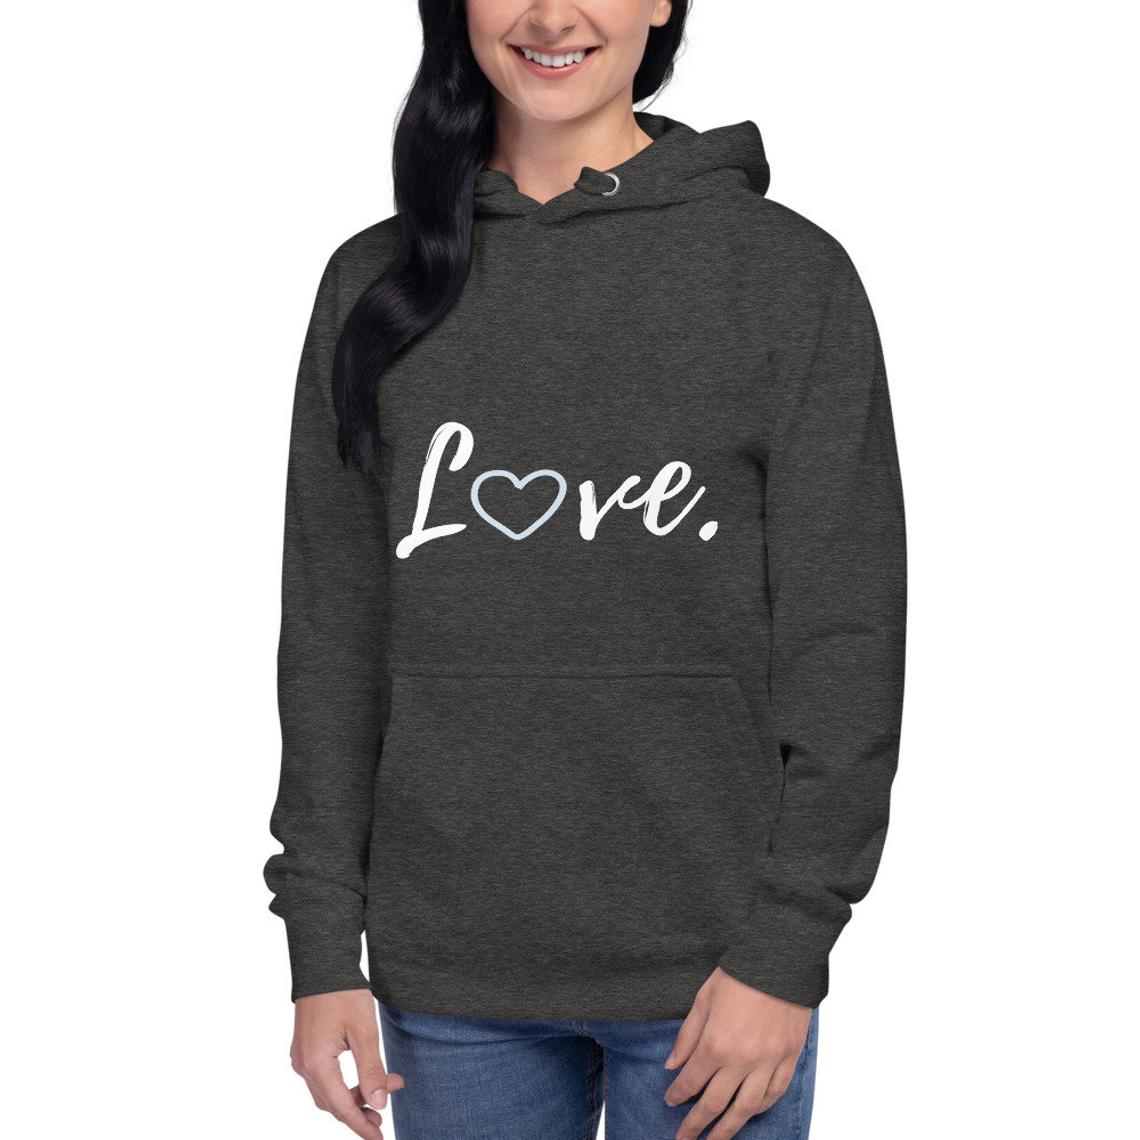 Love Sweatshirt from Mathi Shop